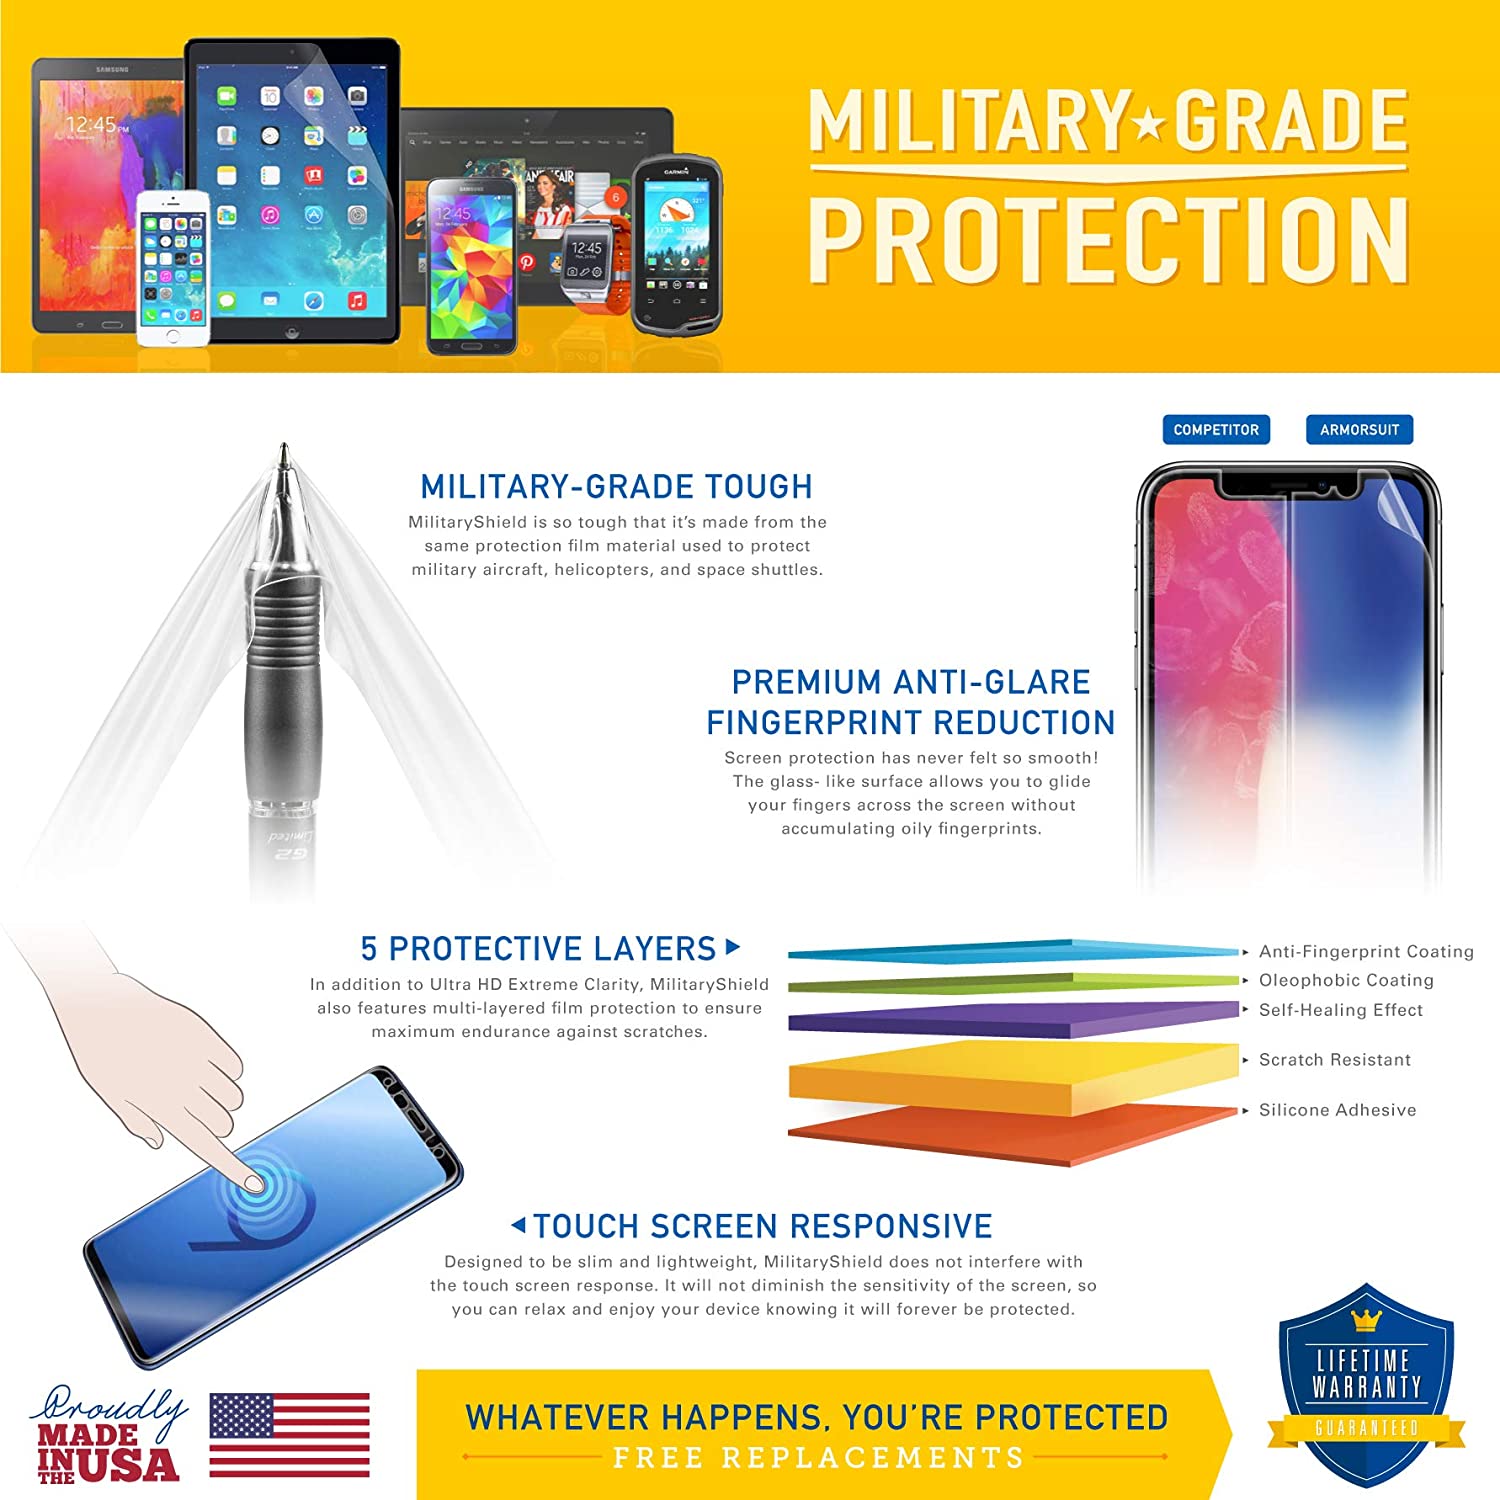 Samsung Galaxy Tab 2 7.0 Protector Shield + Black Carbon Fiber Skin Protector